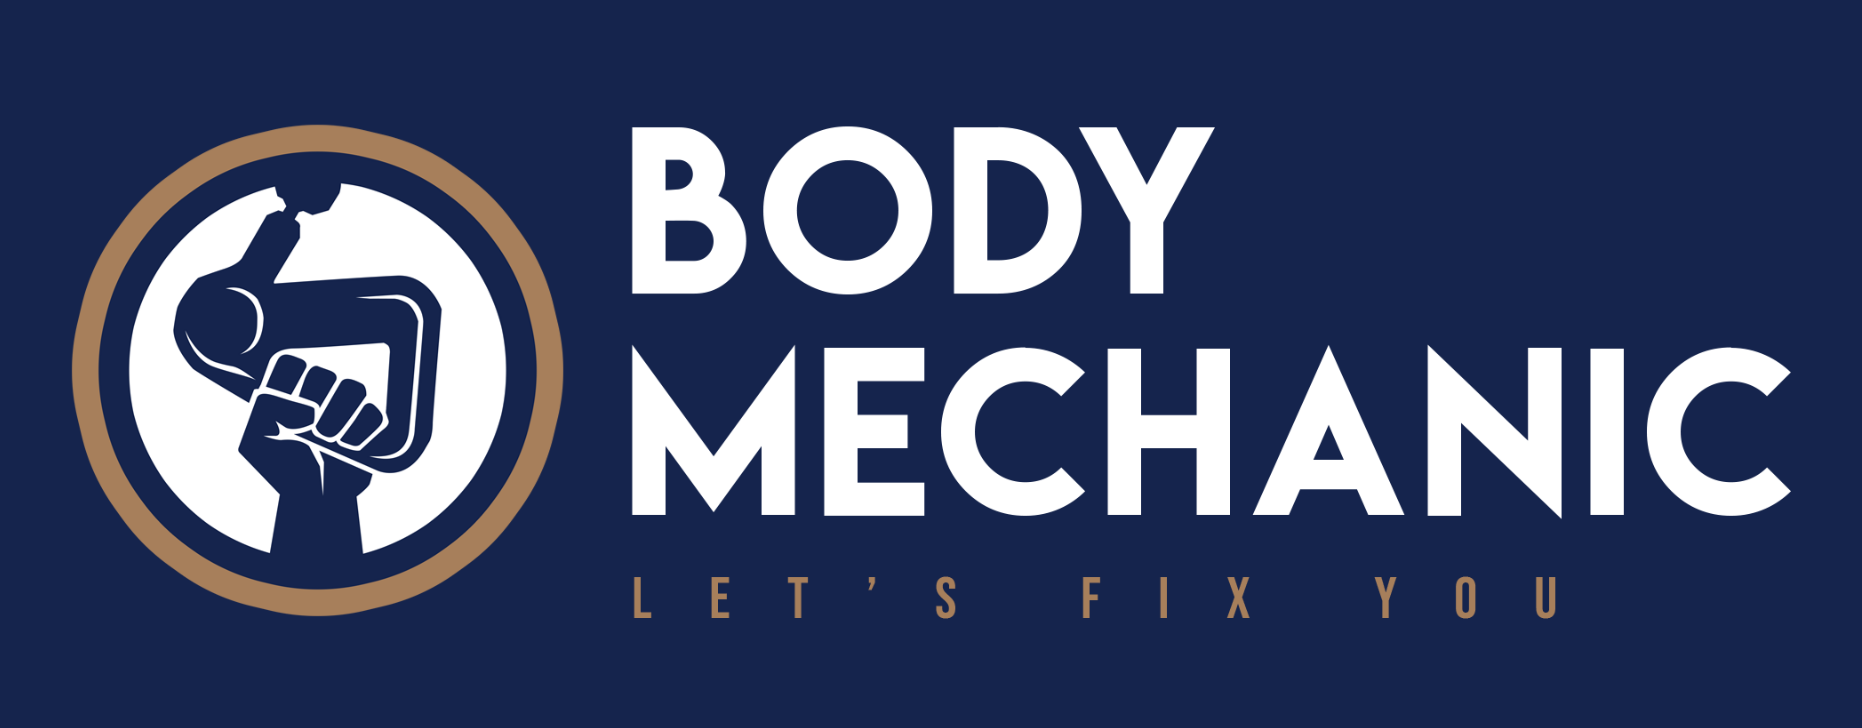 Body Mechanic